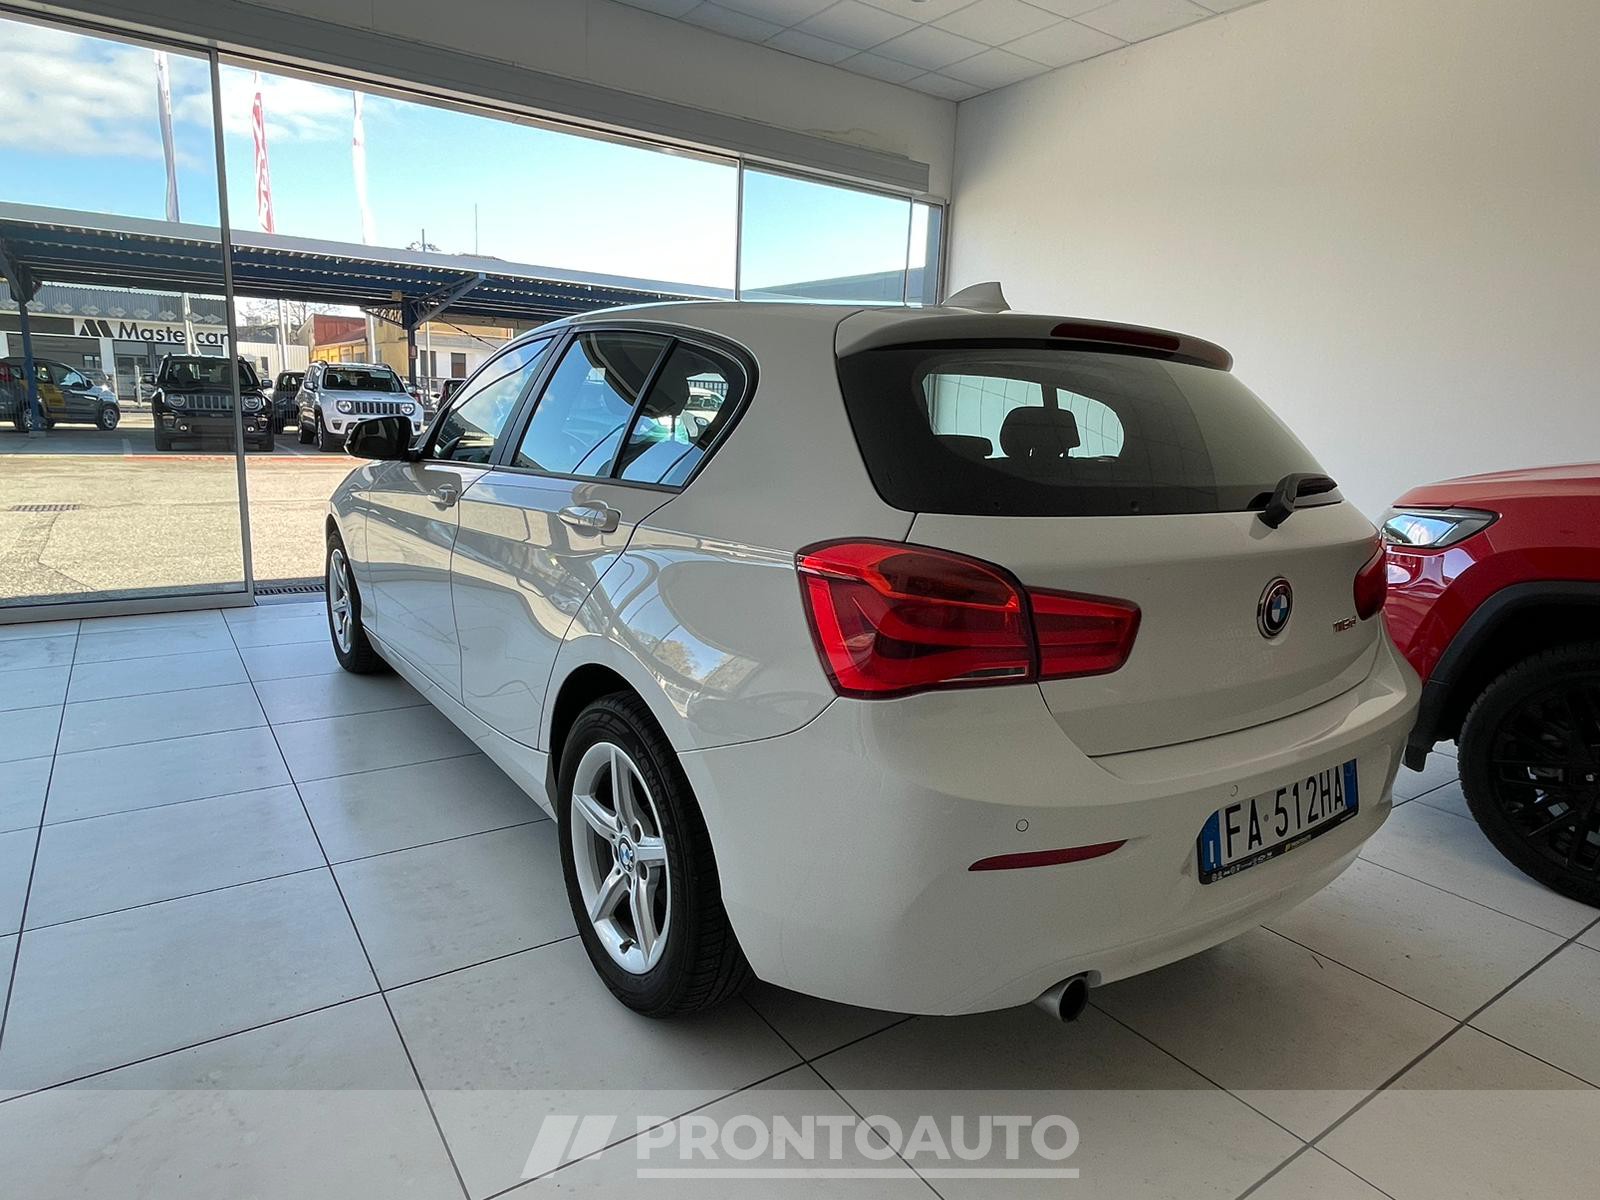 PRONTOAUTO BMW Serie 1